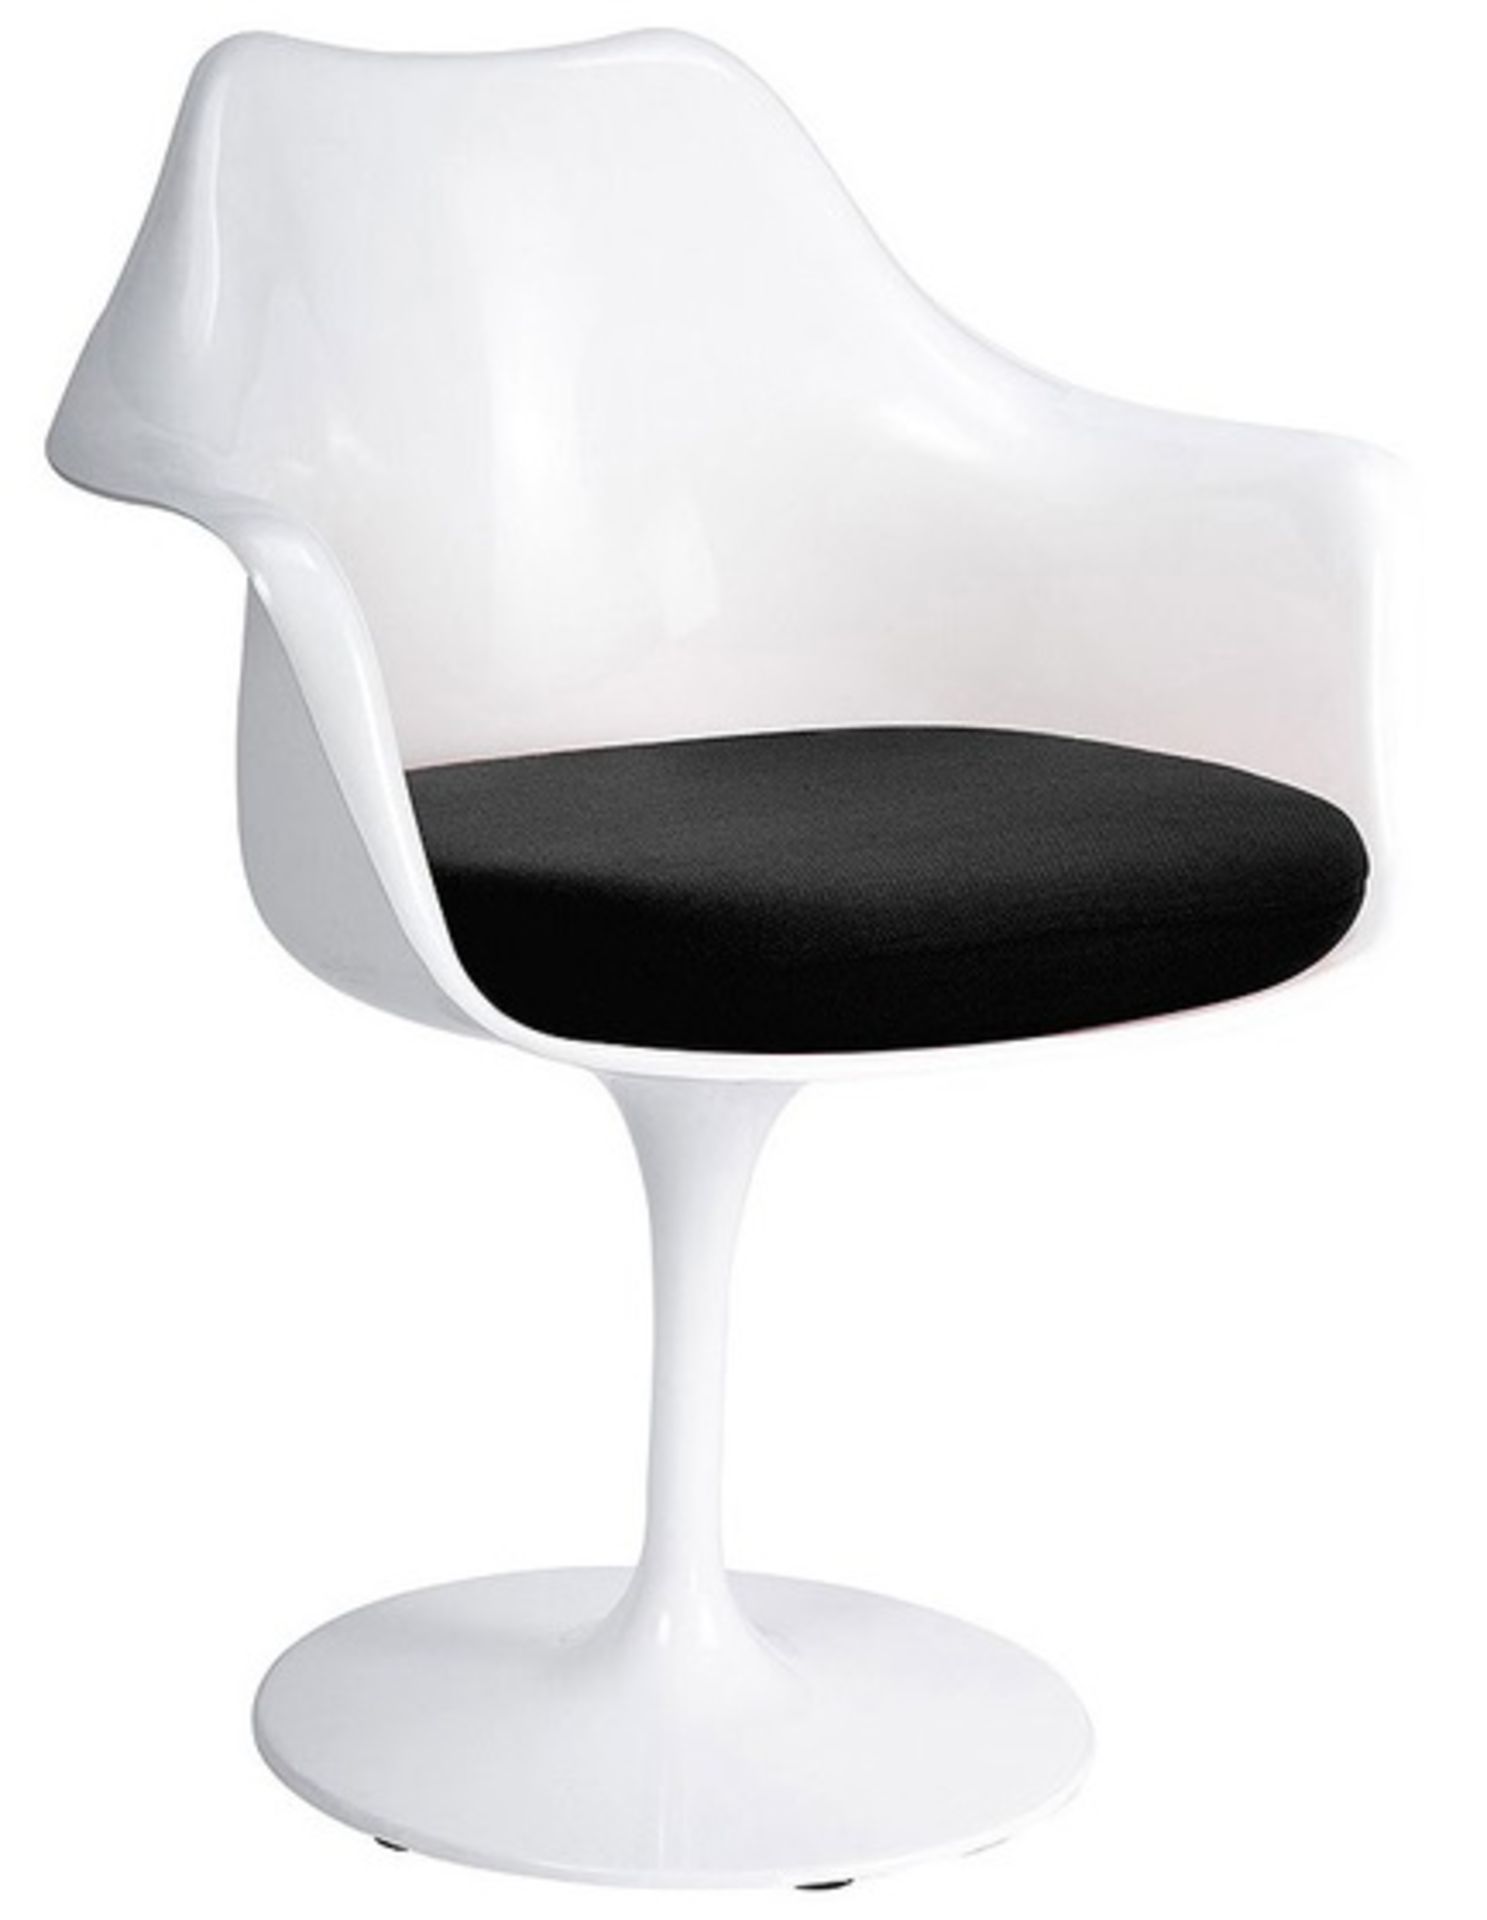 1 x Eero Saarinen Inspired Tulip Armchair In White With Black Cushion - Brand New Boxed Stock